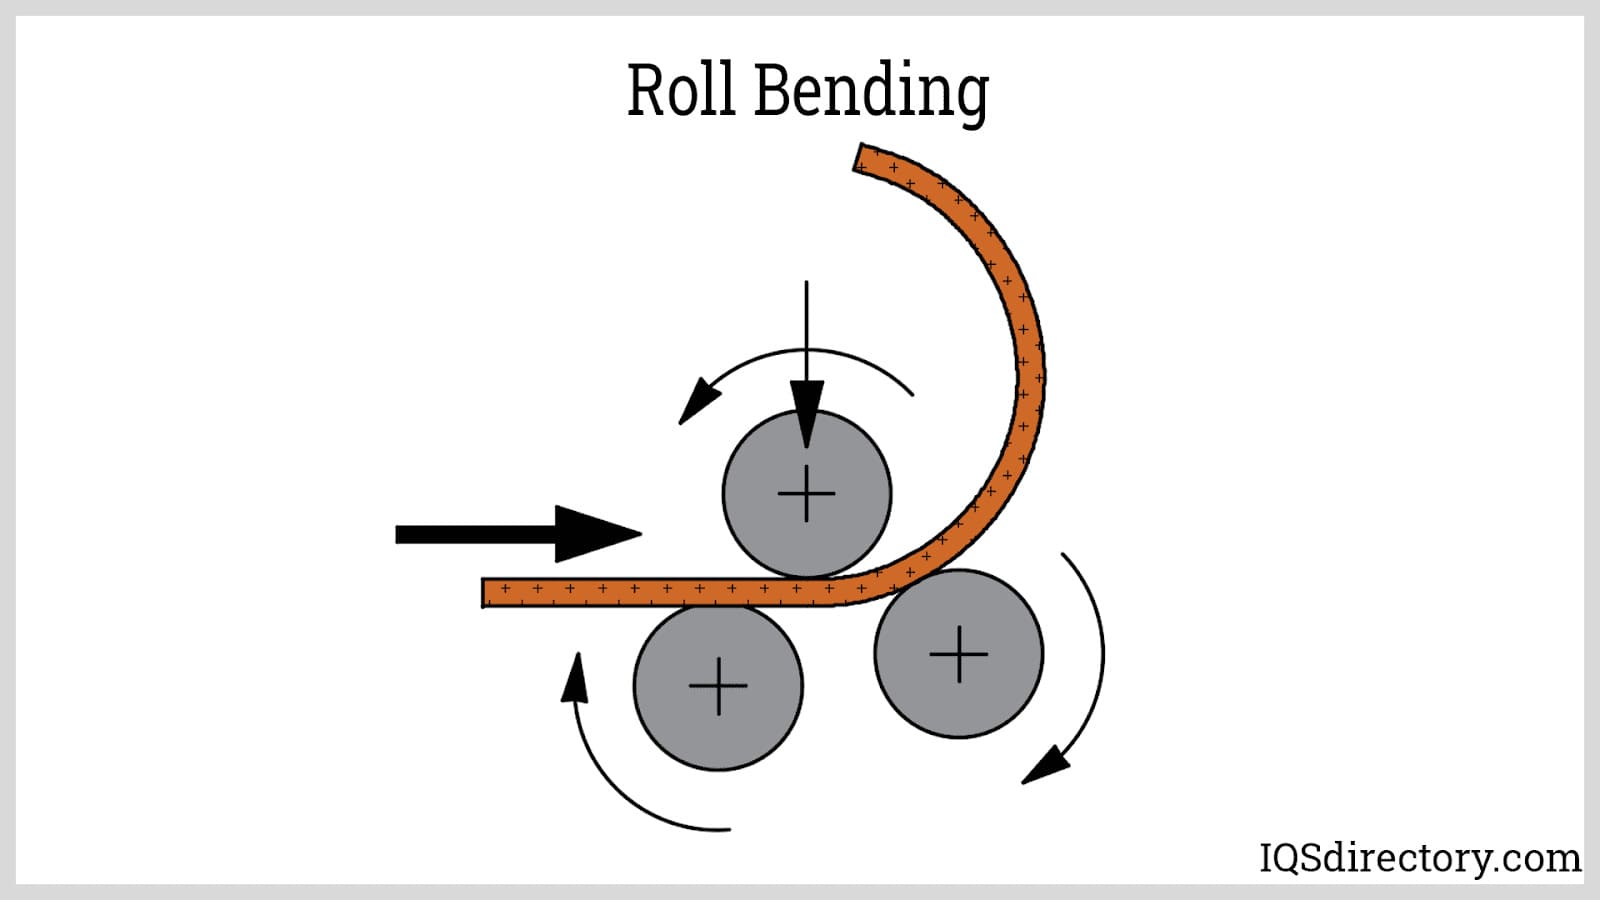 Roll Bending